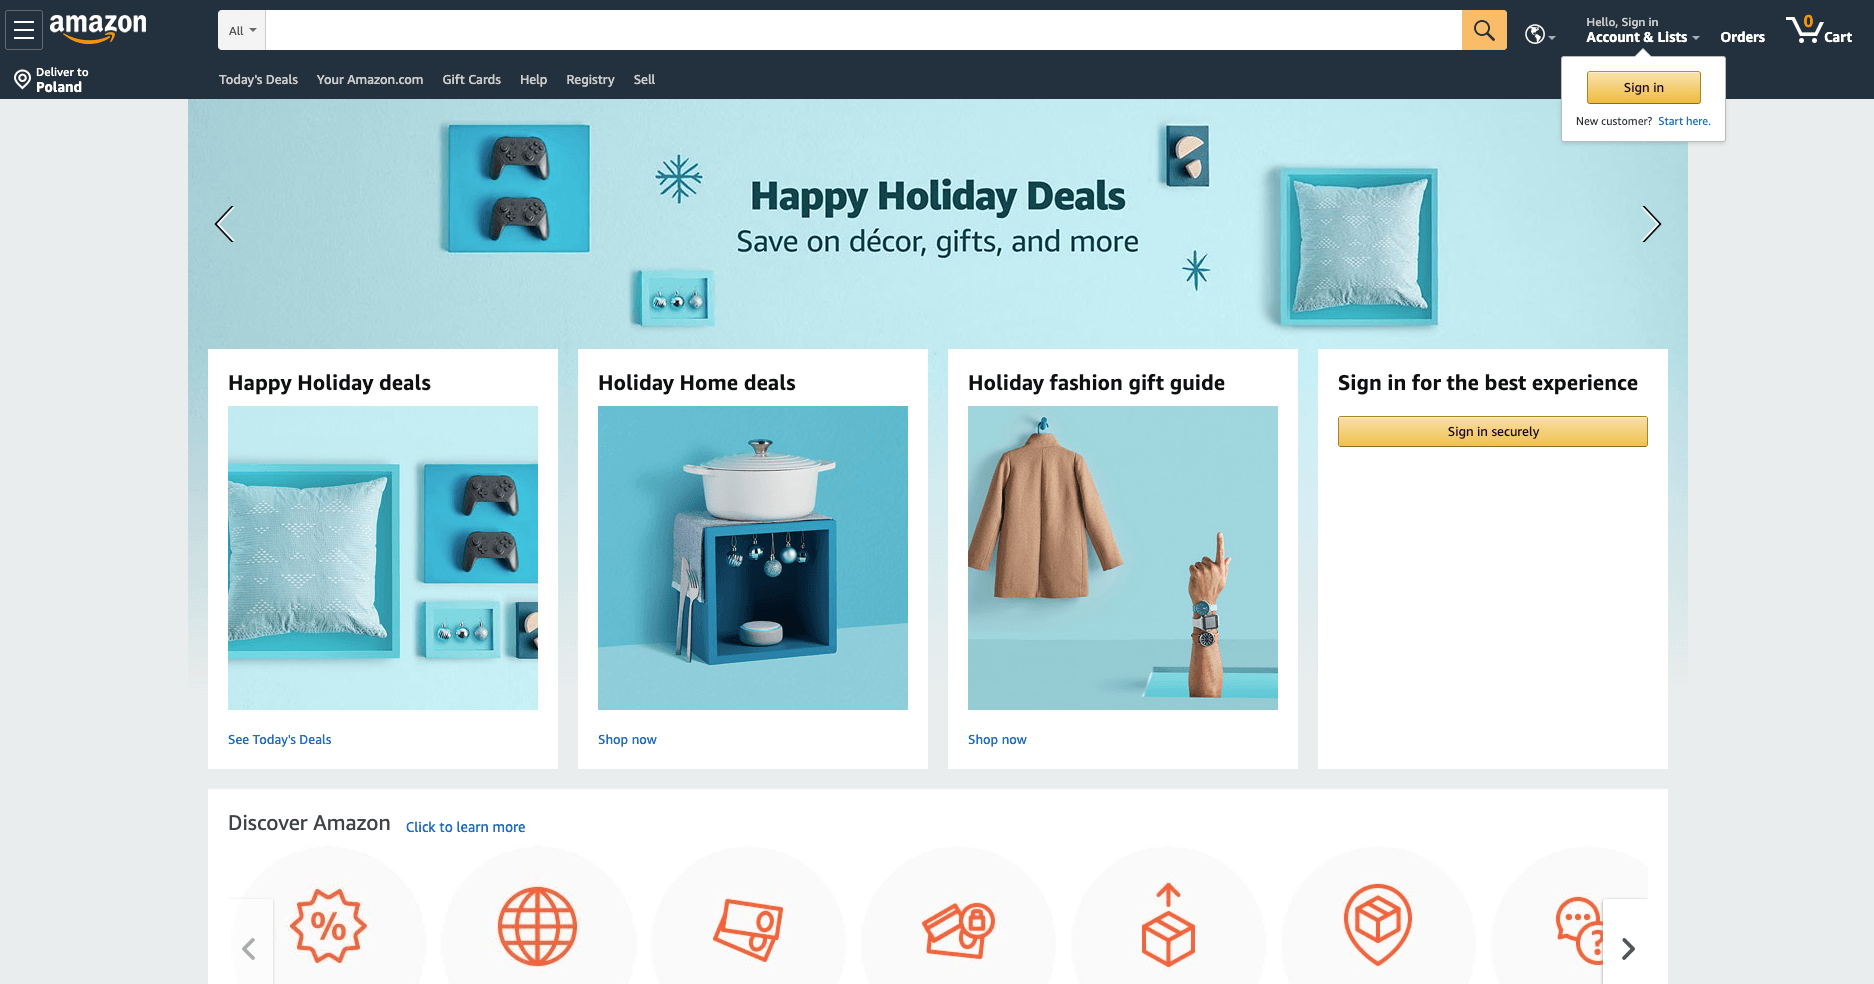 Amazon's homepage